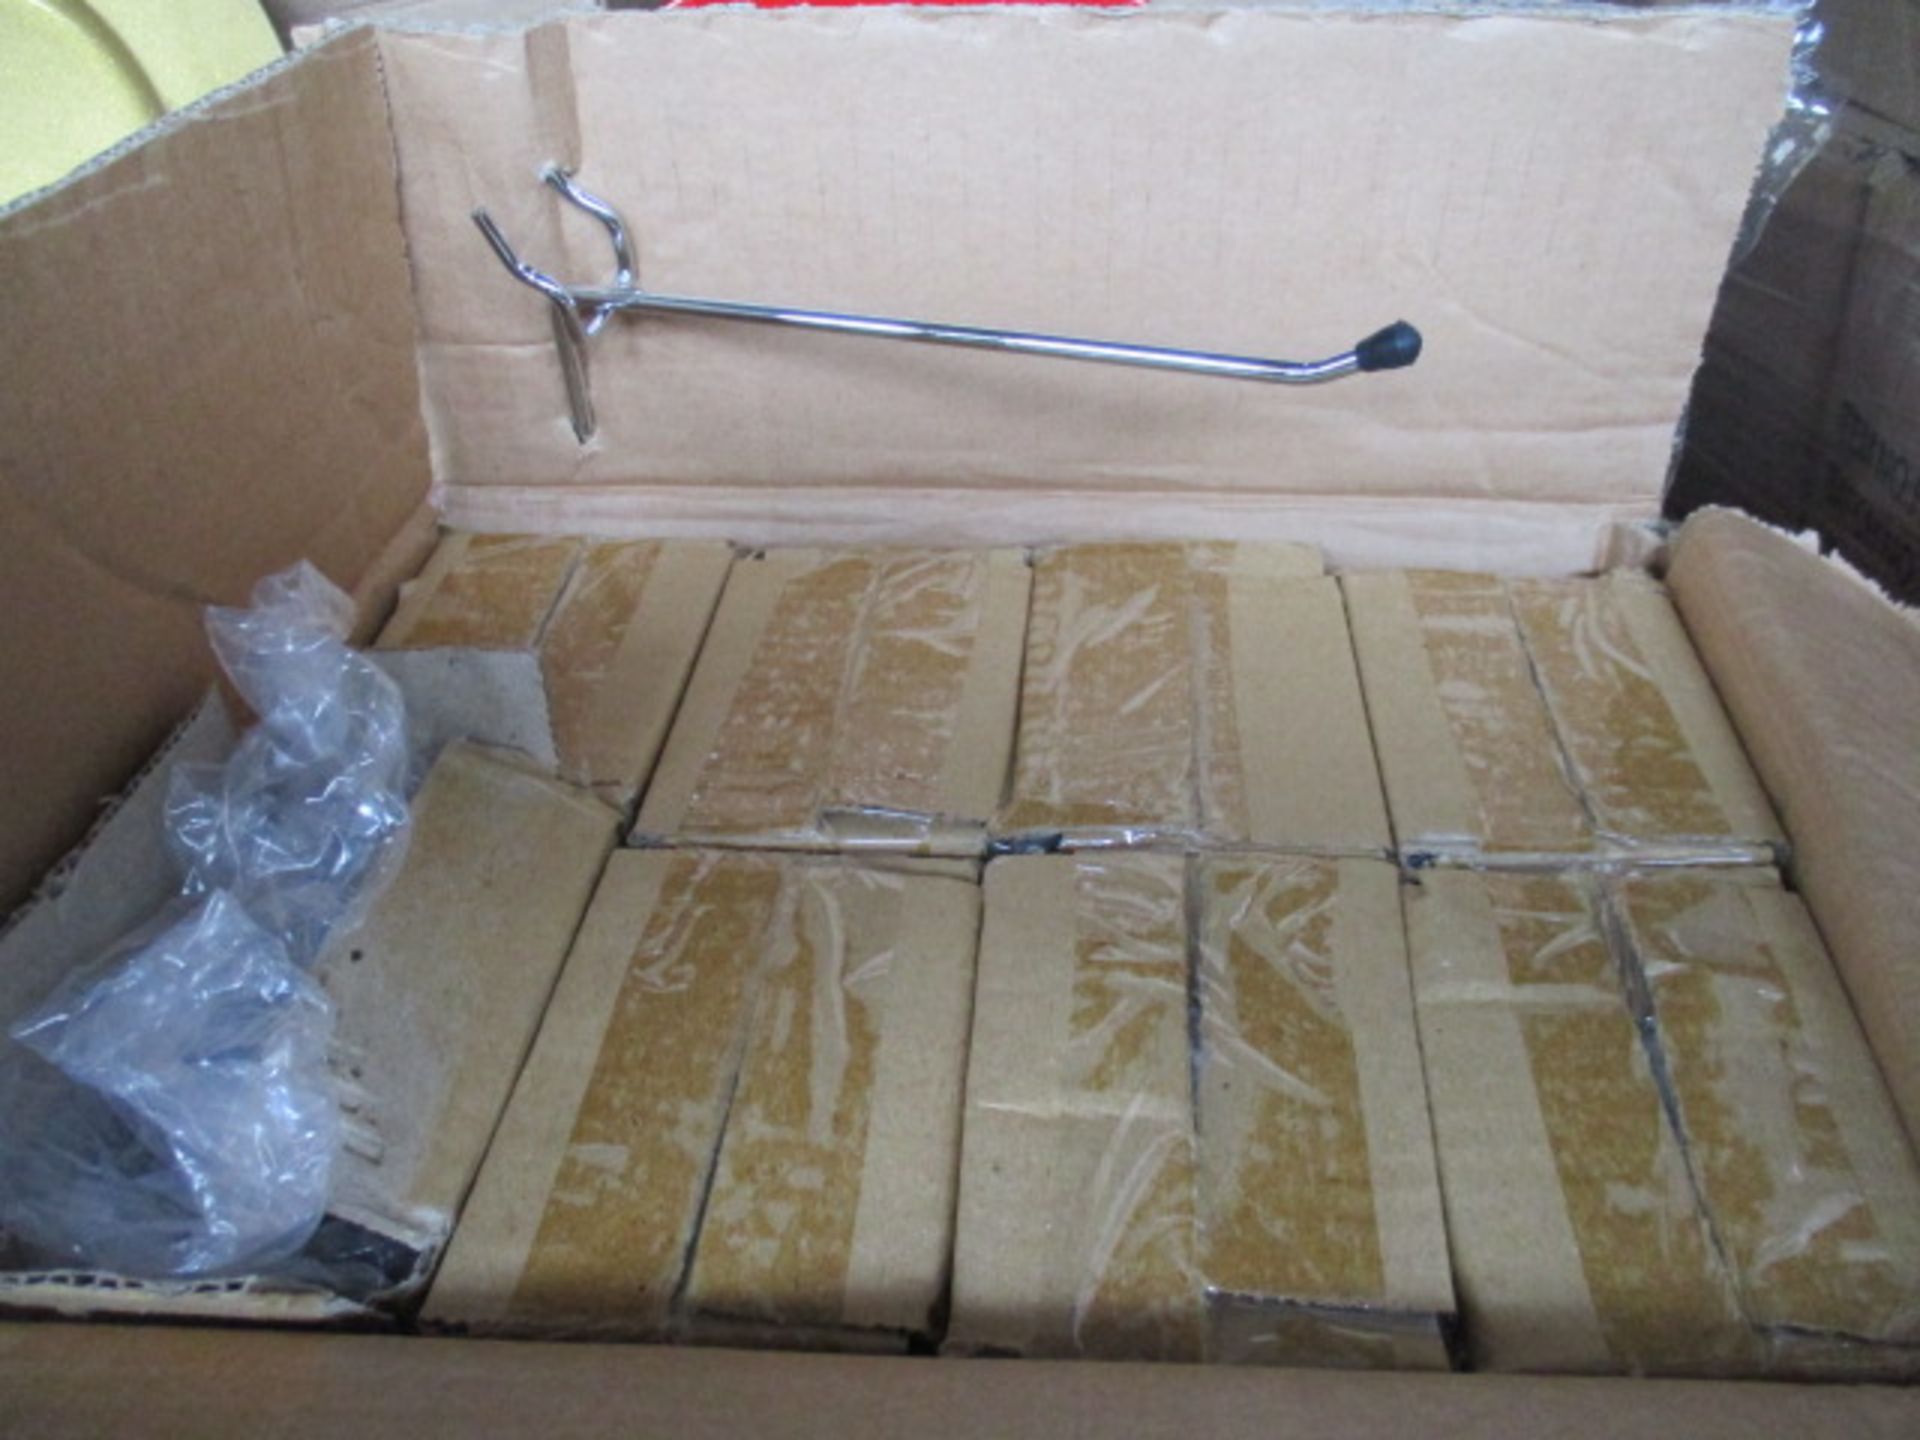 10. x cartons 8 inch peg board hook - 96pcs per carton - 960pcs total - sealed unopened - rrp 40p